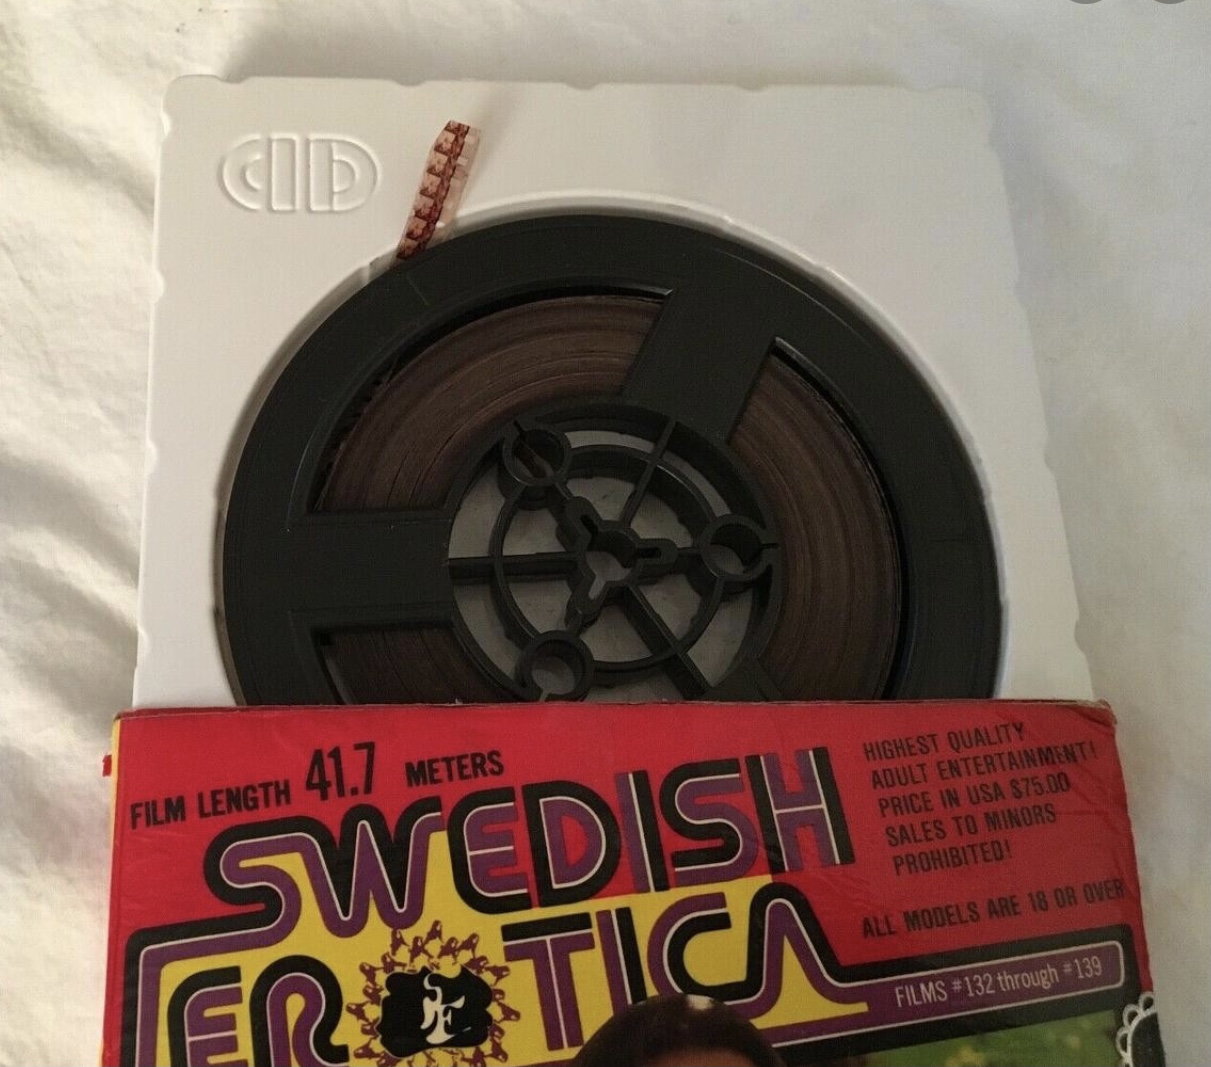 Swedish Erotica 8mm reel